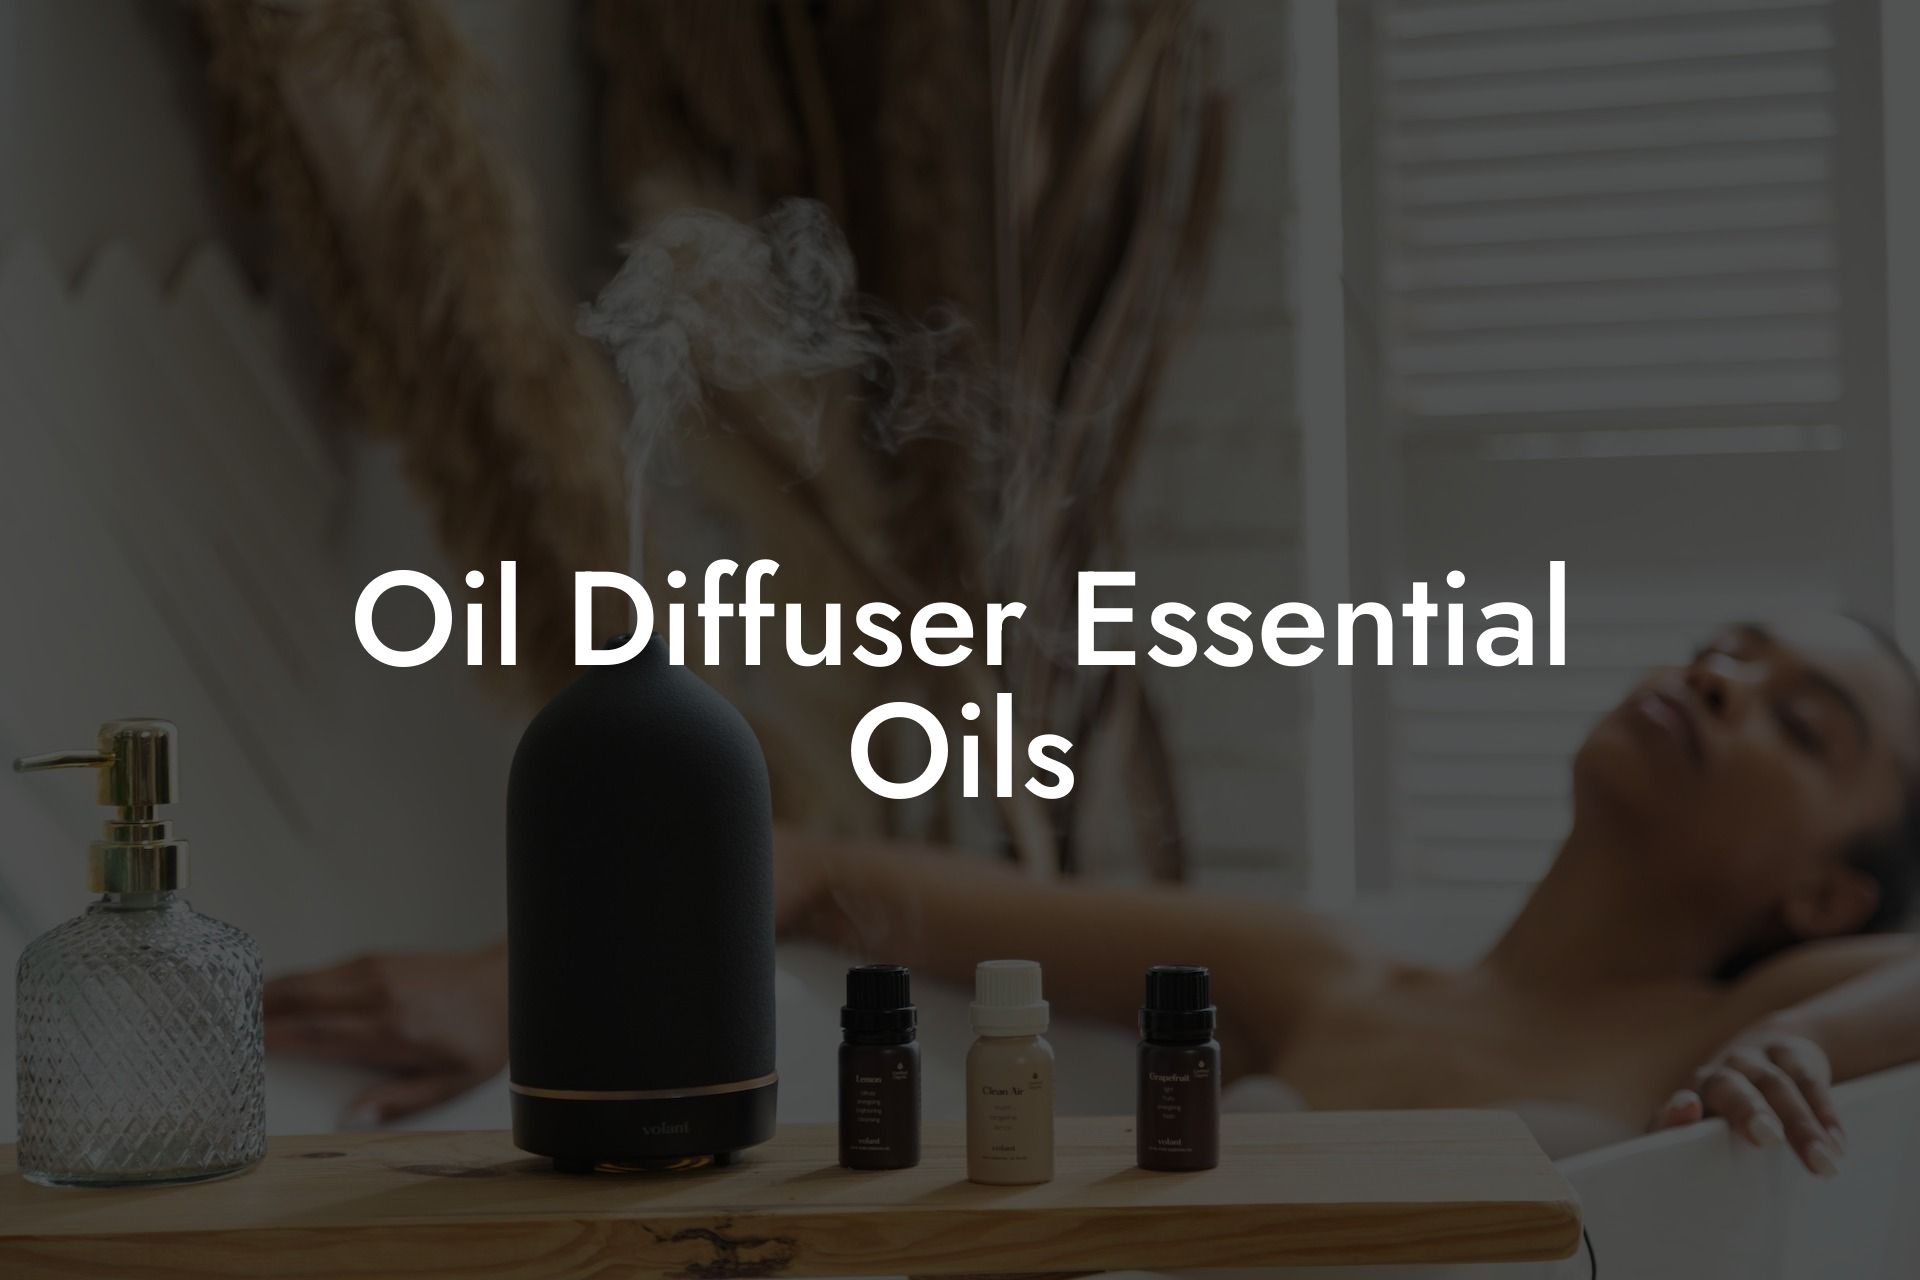 Oil Diffuser Essential Oils